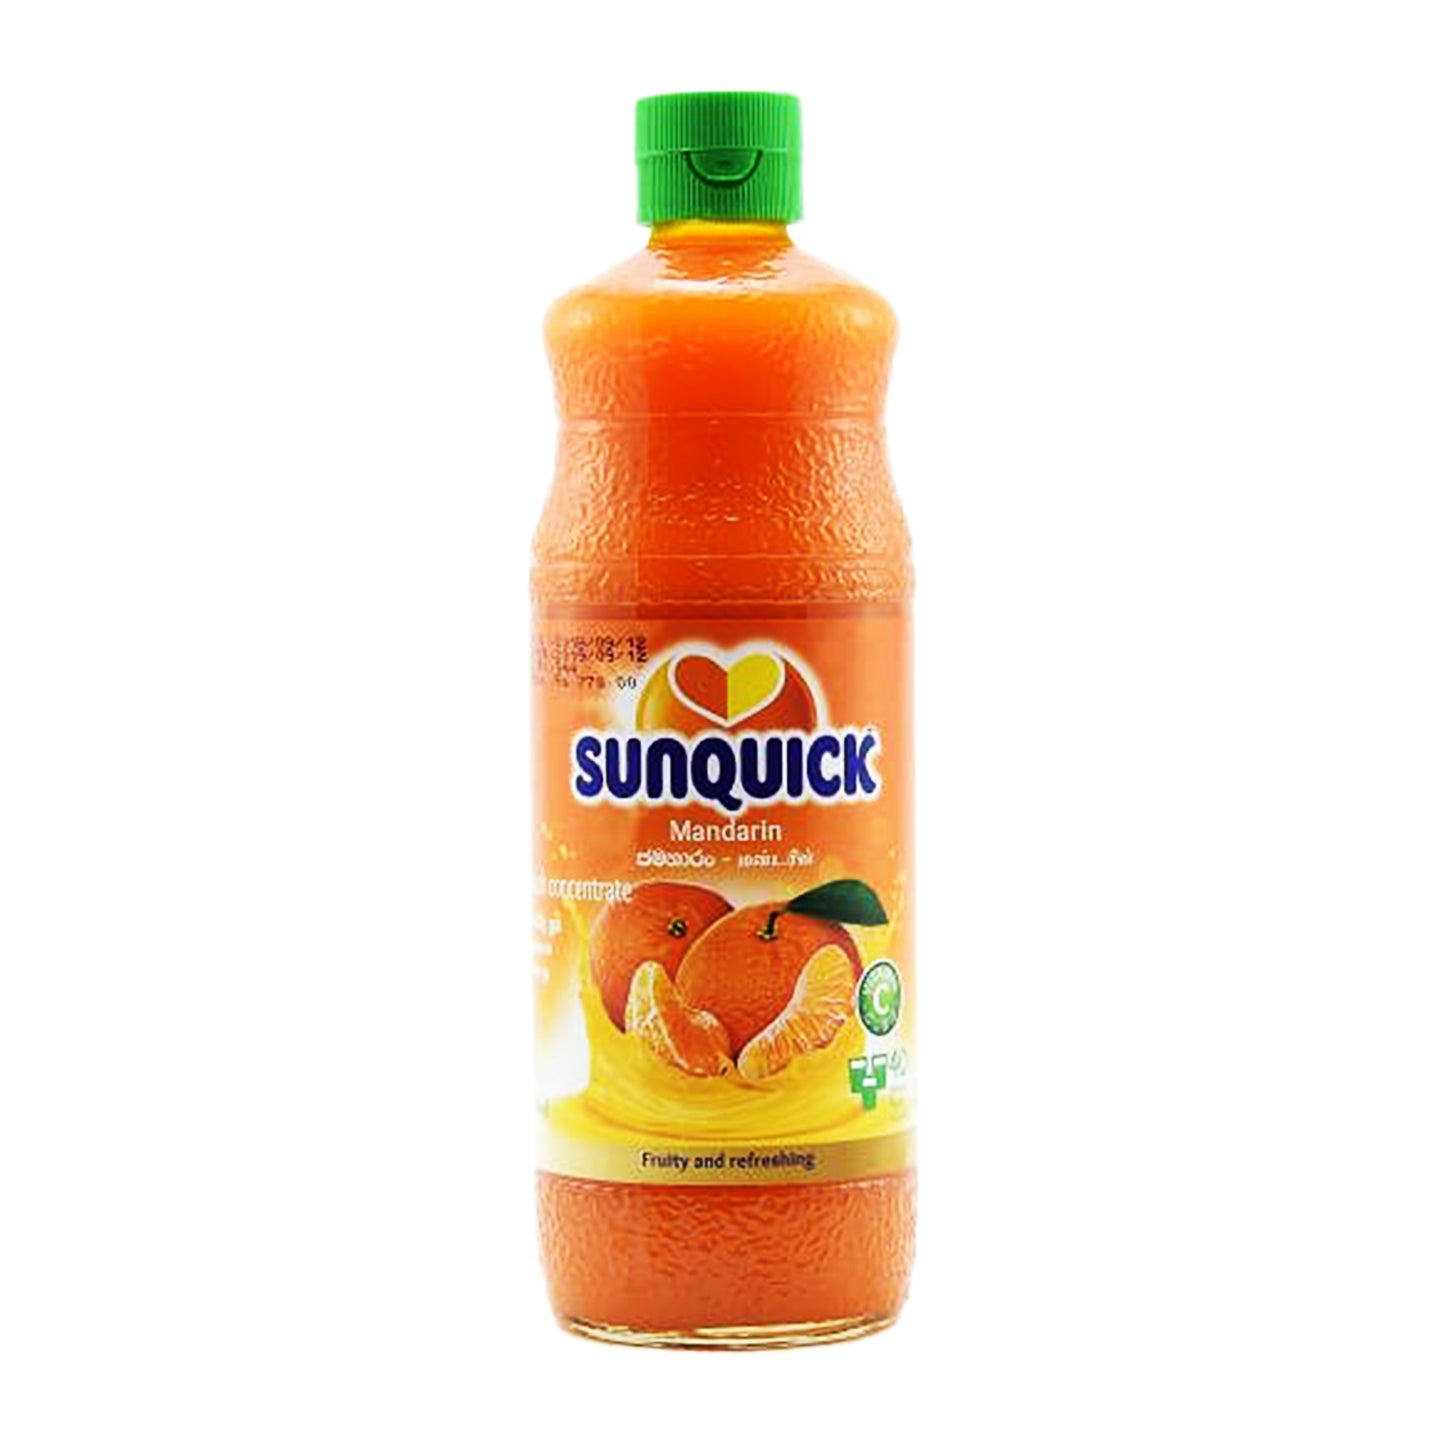 Sunquick mandarynka (840ml)